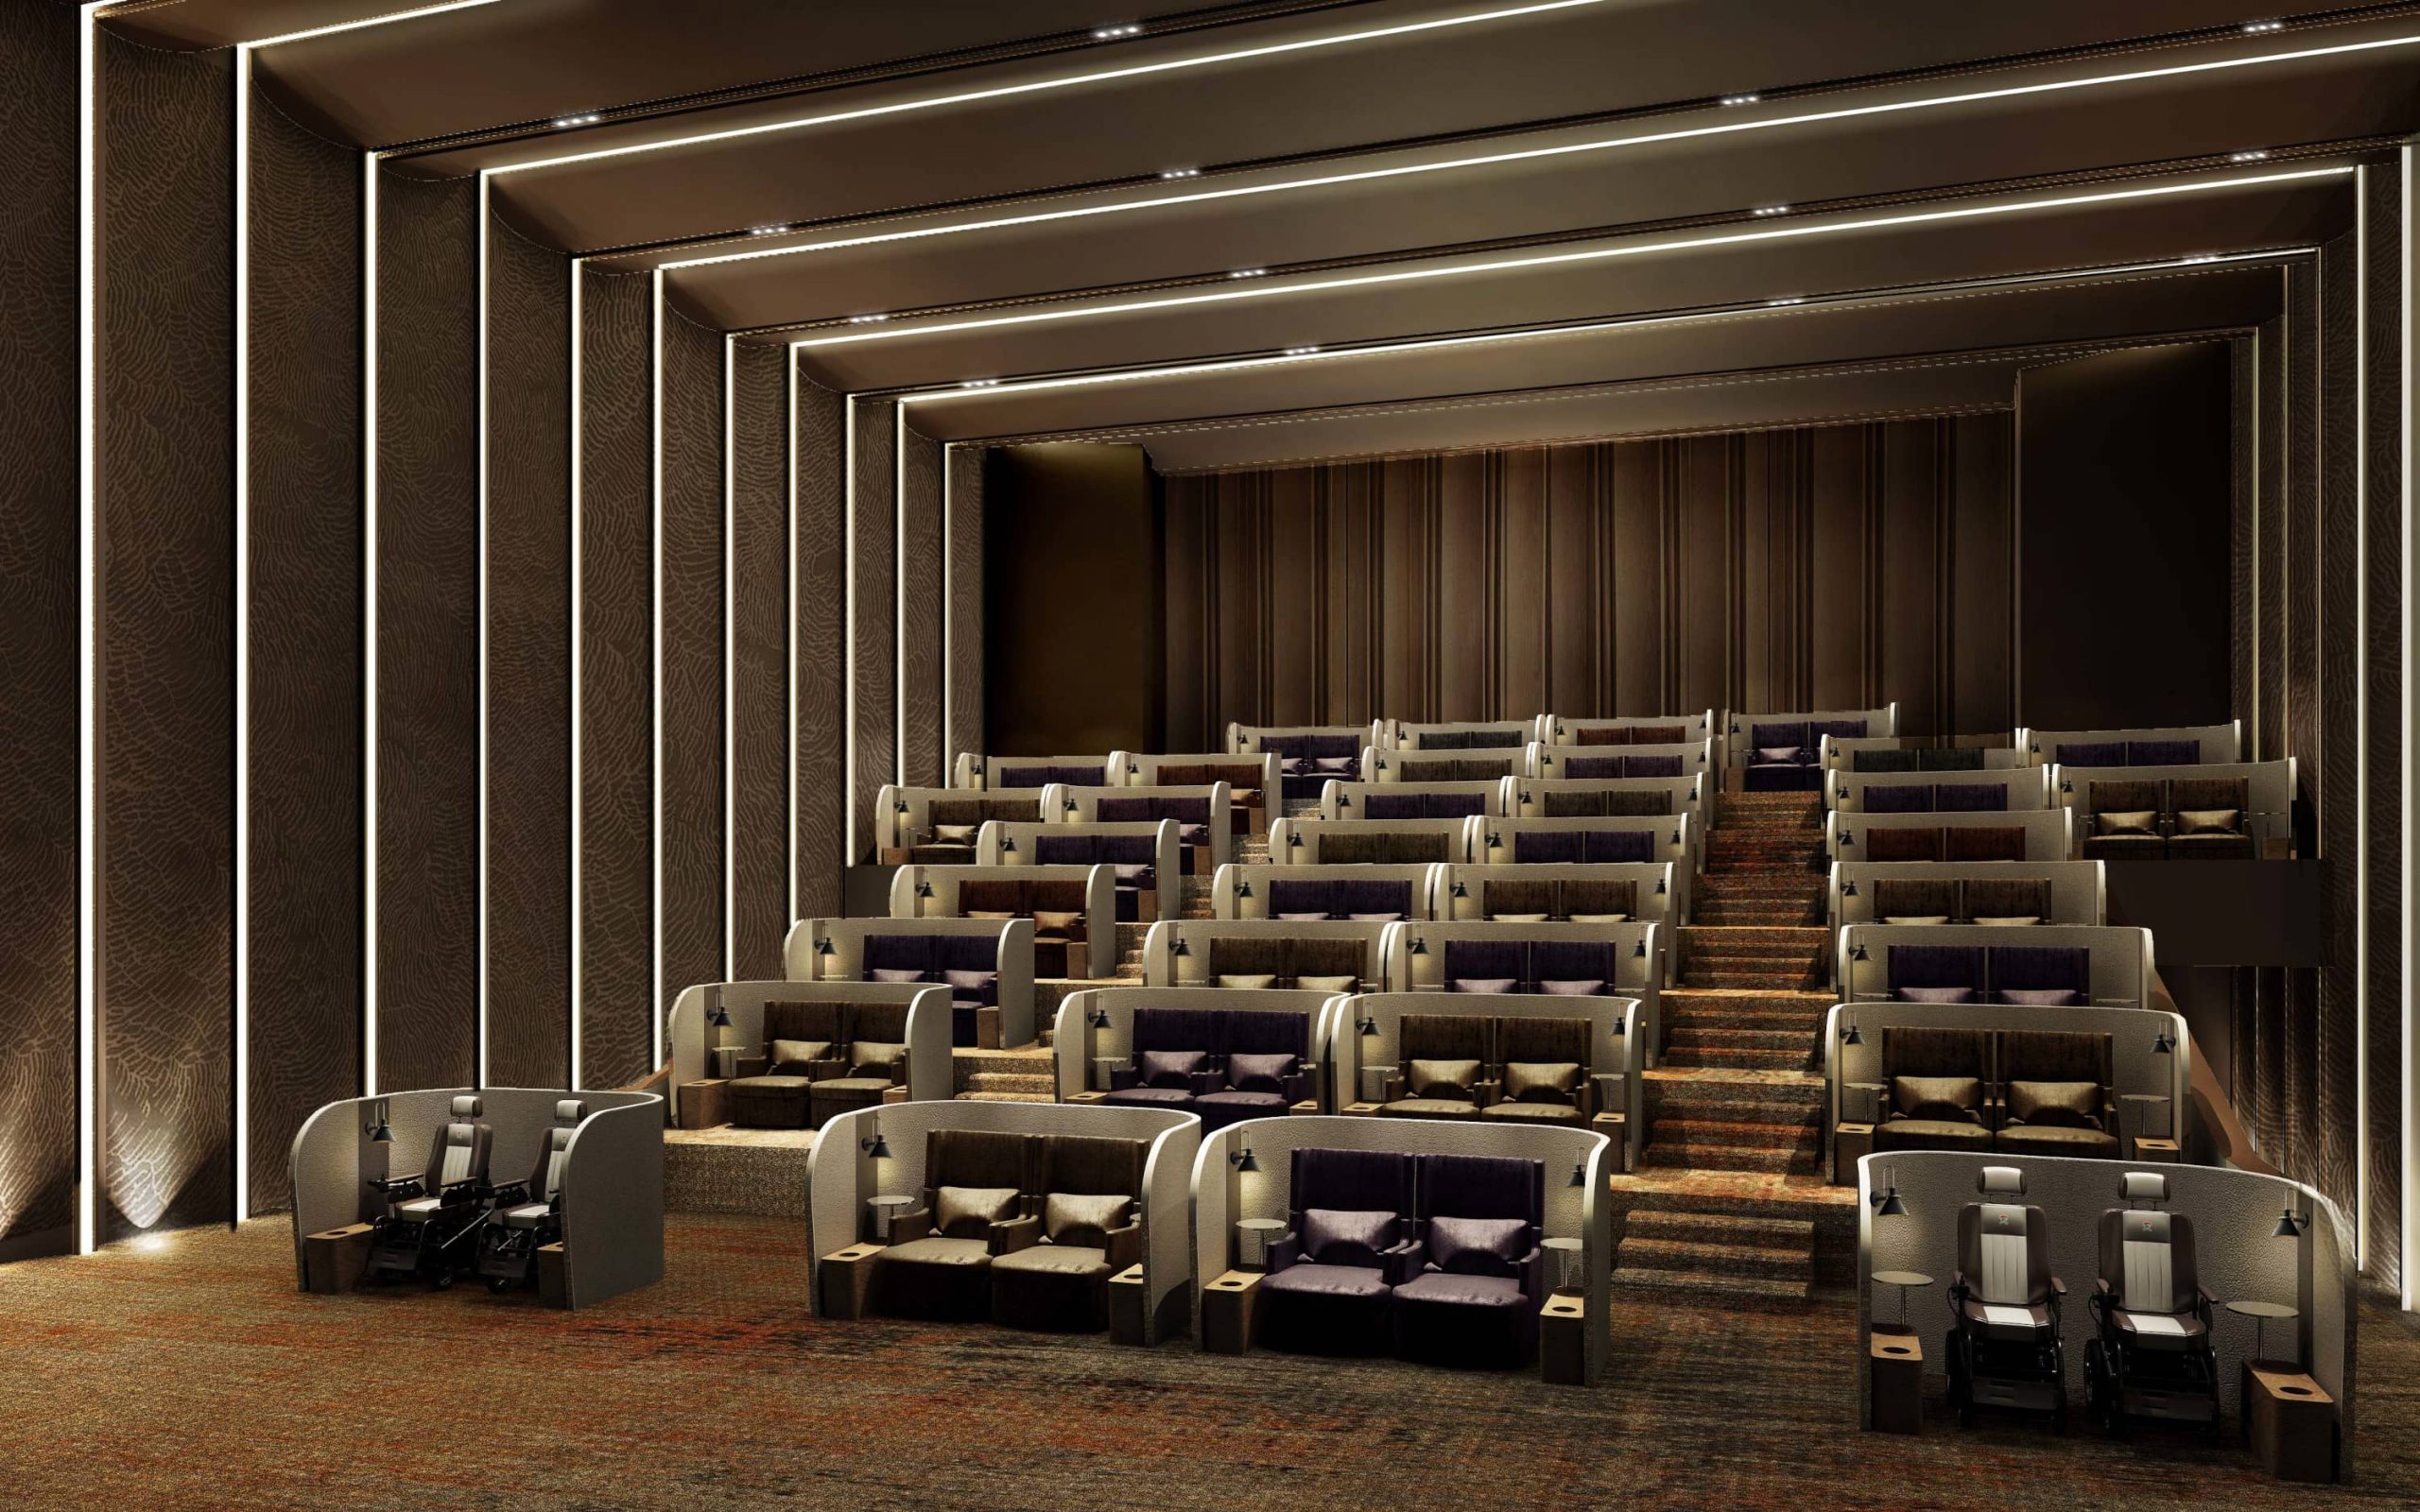 NUSTAR Resort and Casino cinema.